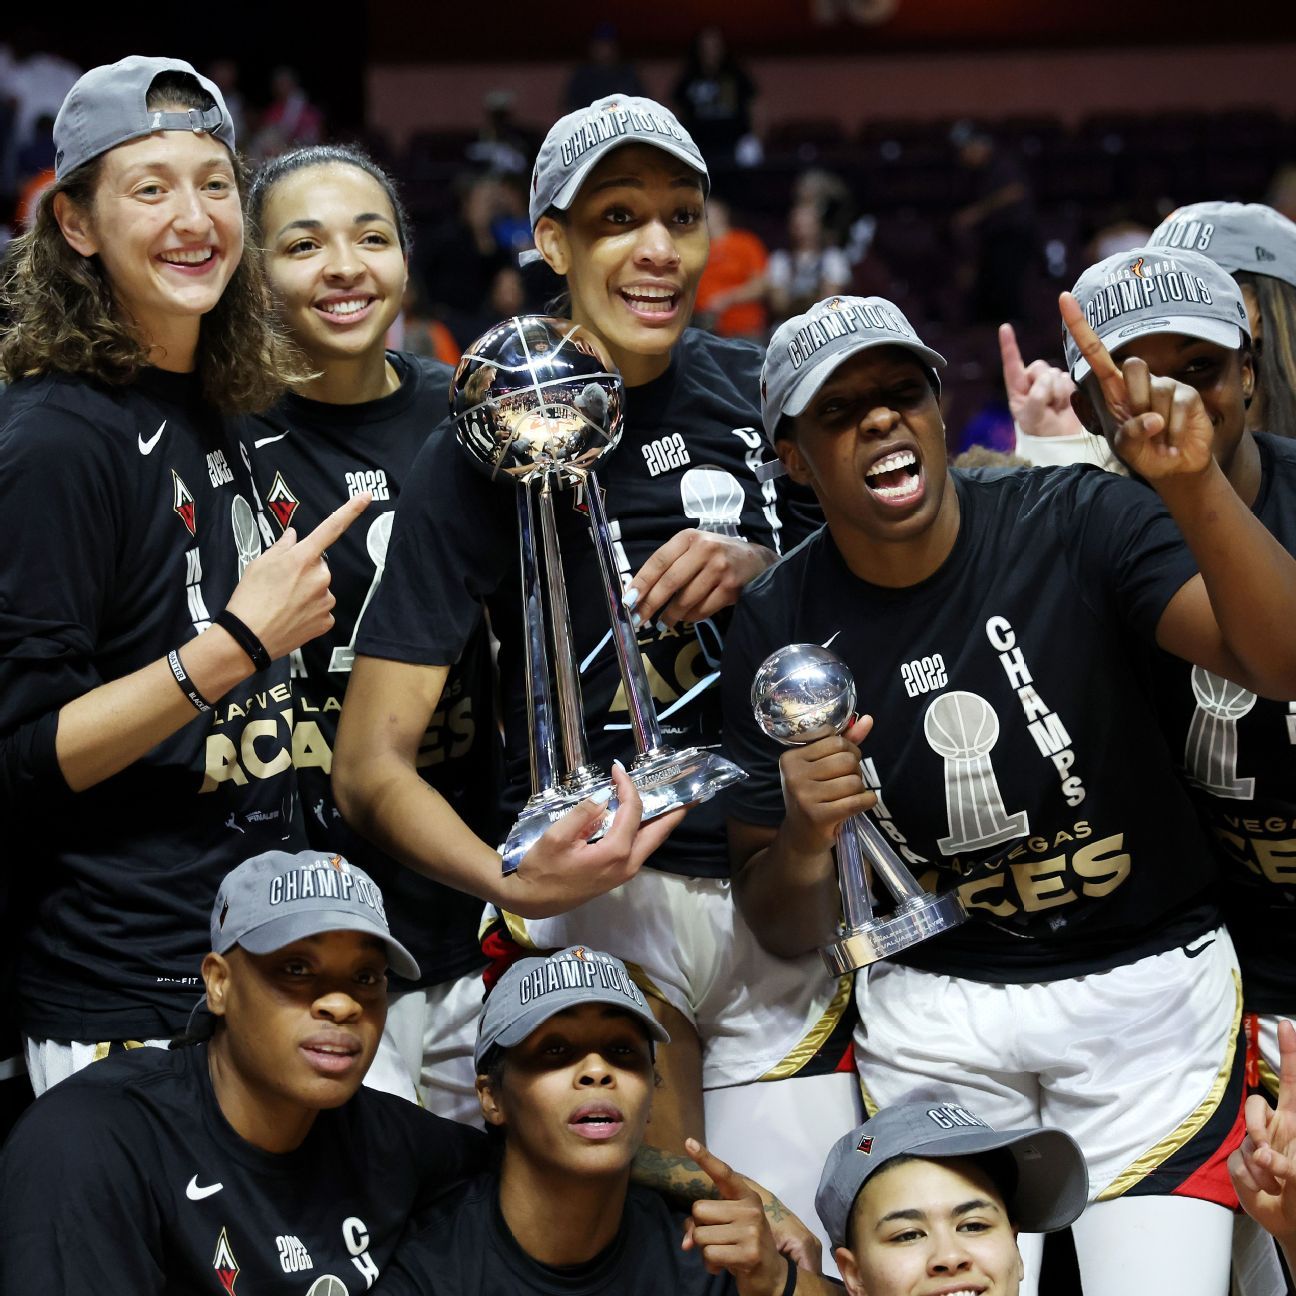 Las Vegas Aces Will Be Name of WNBA Team – SportsTravel